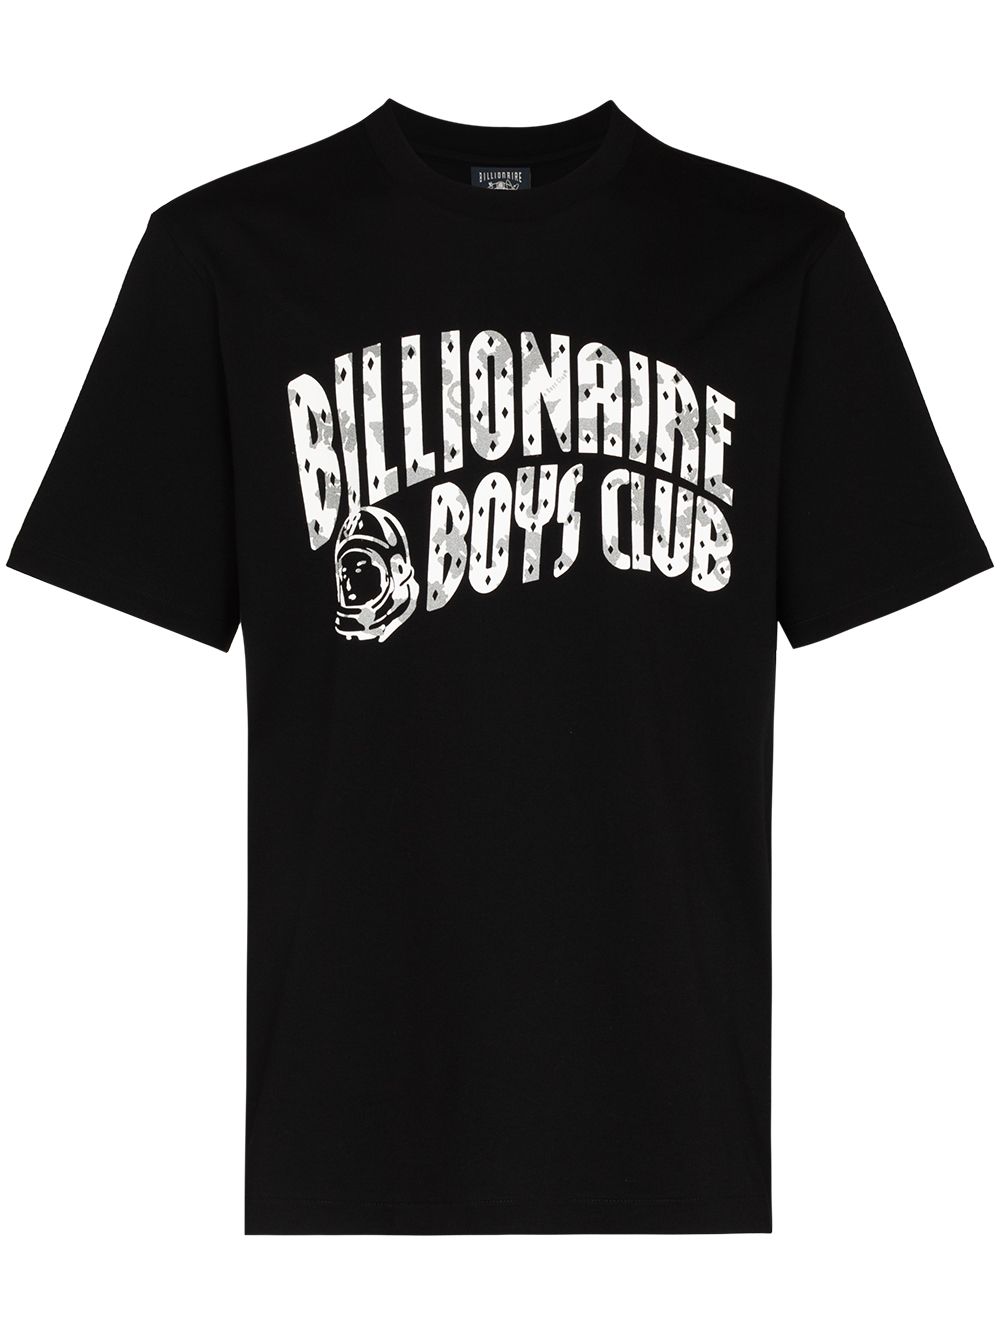 фото Billionaire boys club футболка arch с логотипом